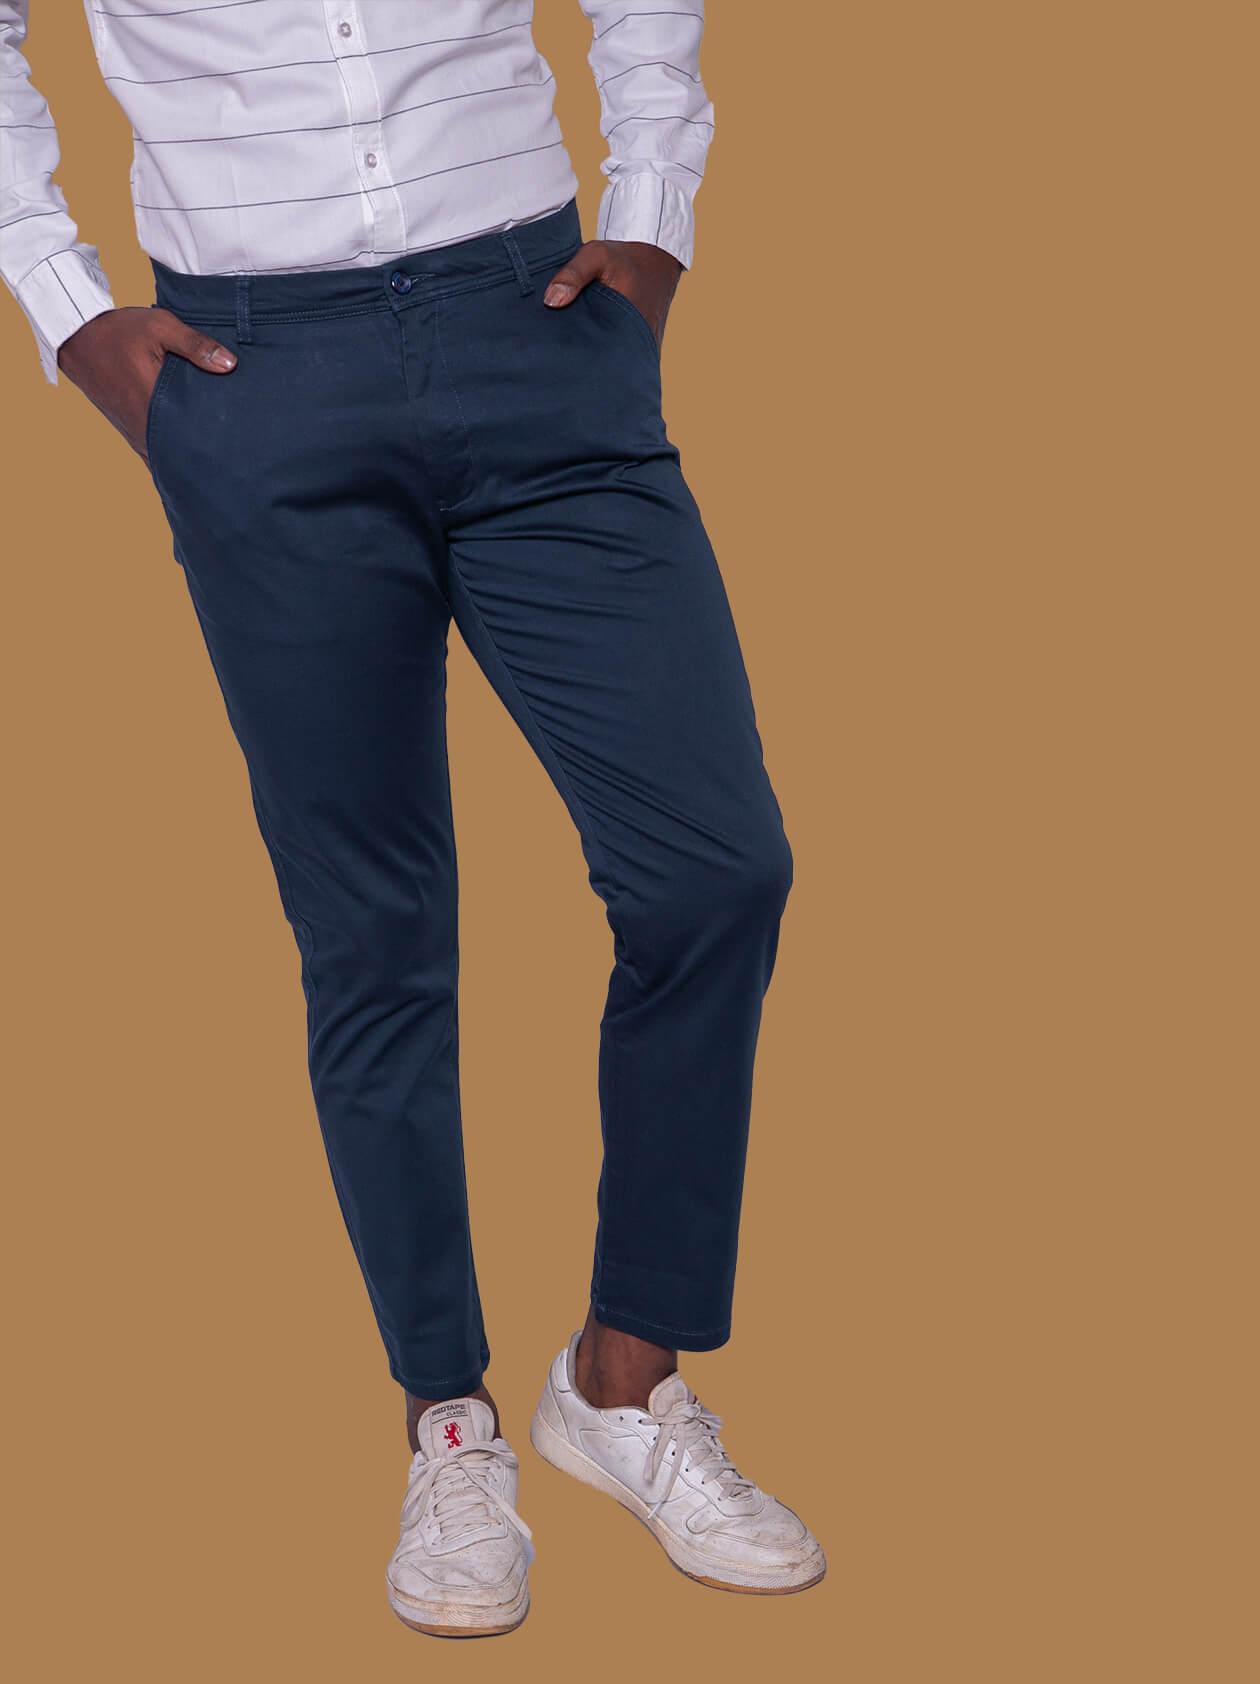 Suspenders Gallace Belts Stylish Trendy Fashionable Elegant for Kids Above  Adult Men Adult Women